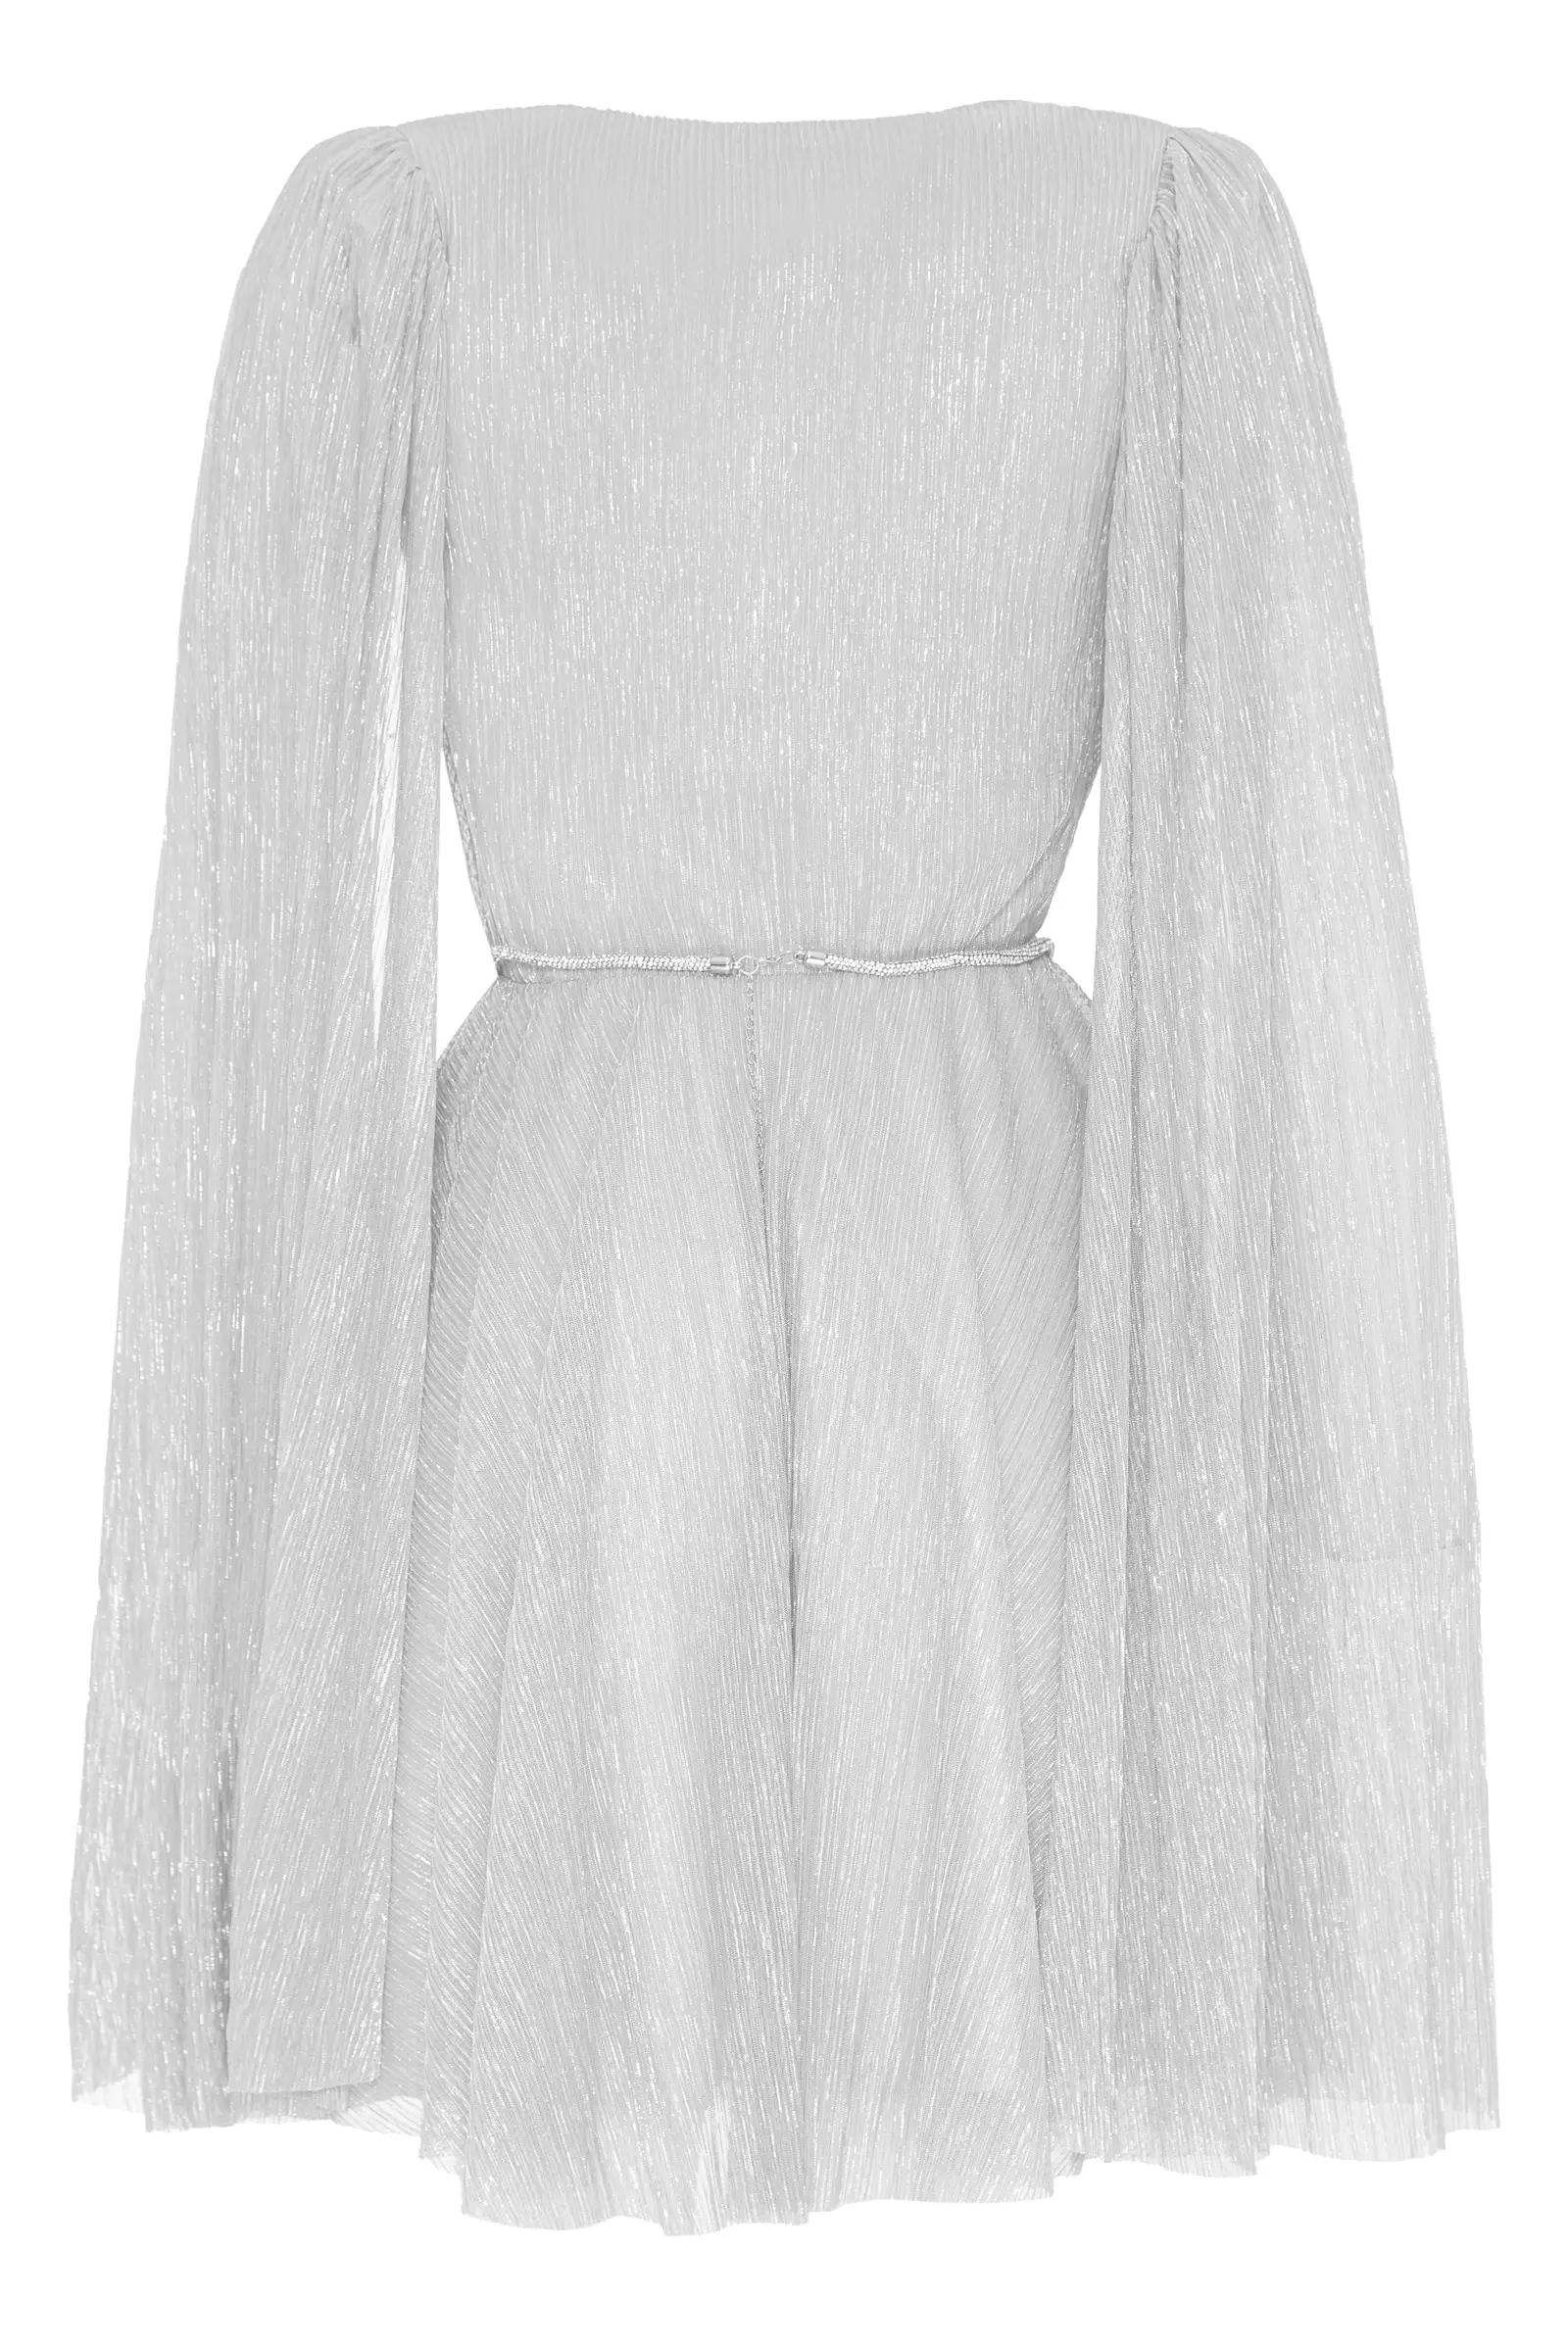 Silver plus size moonlight long sleeve mini dress